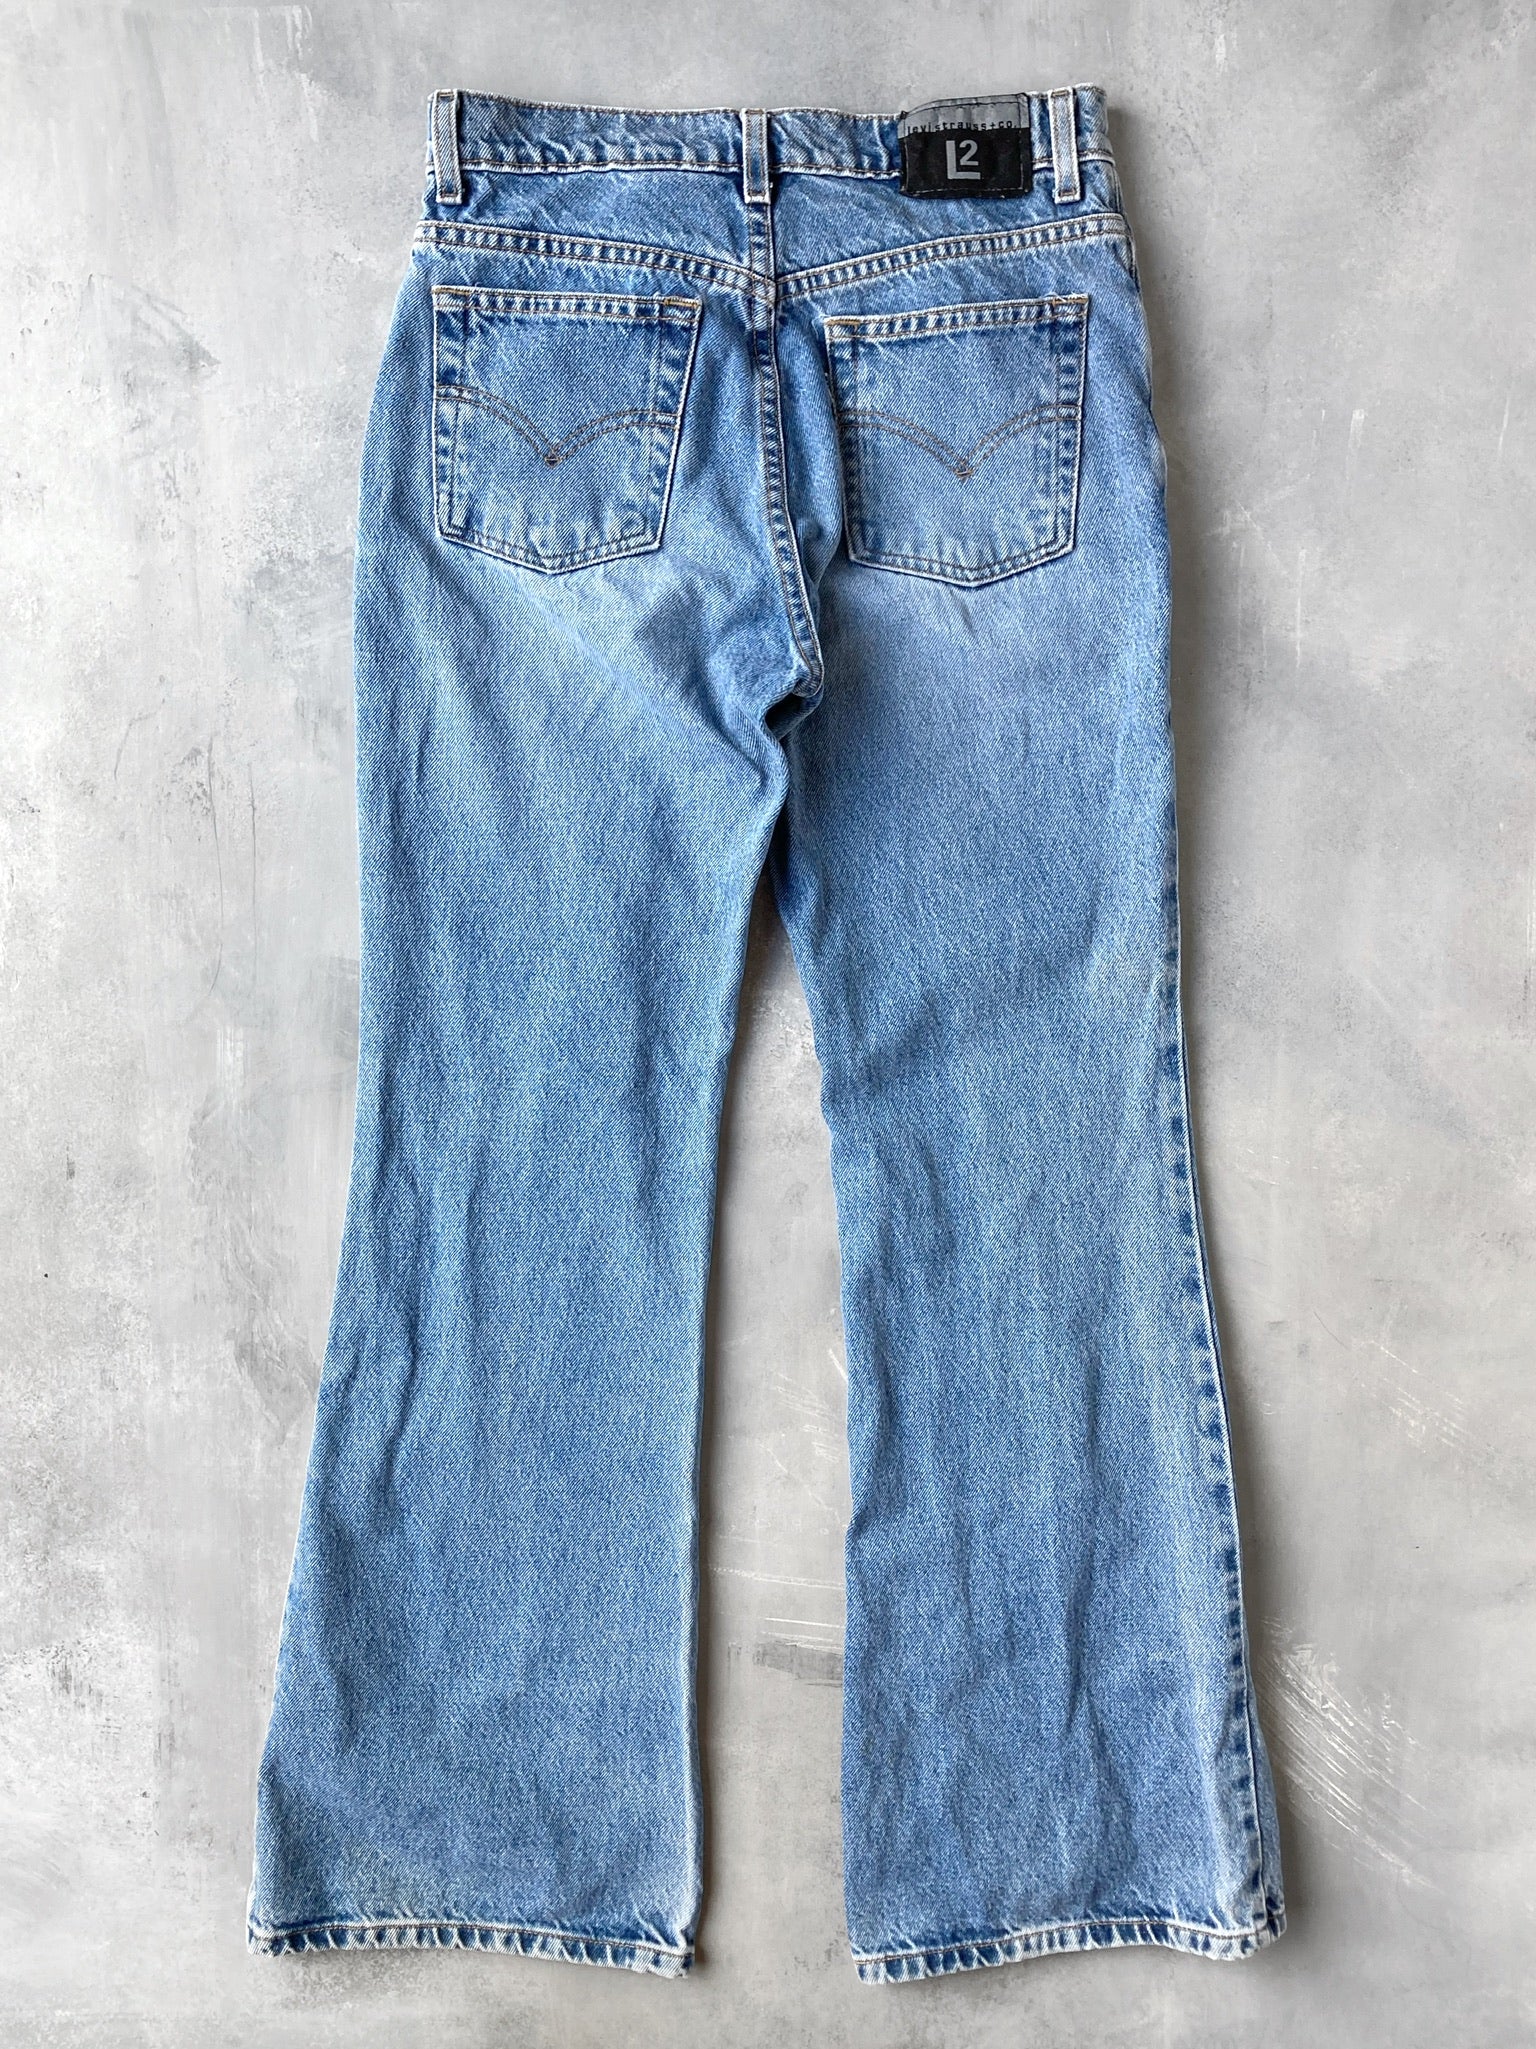 Levi's Silvertab Jeans 90's - 6 – Lot 1 Vintage